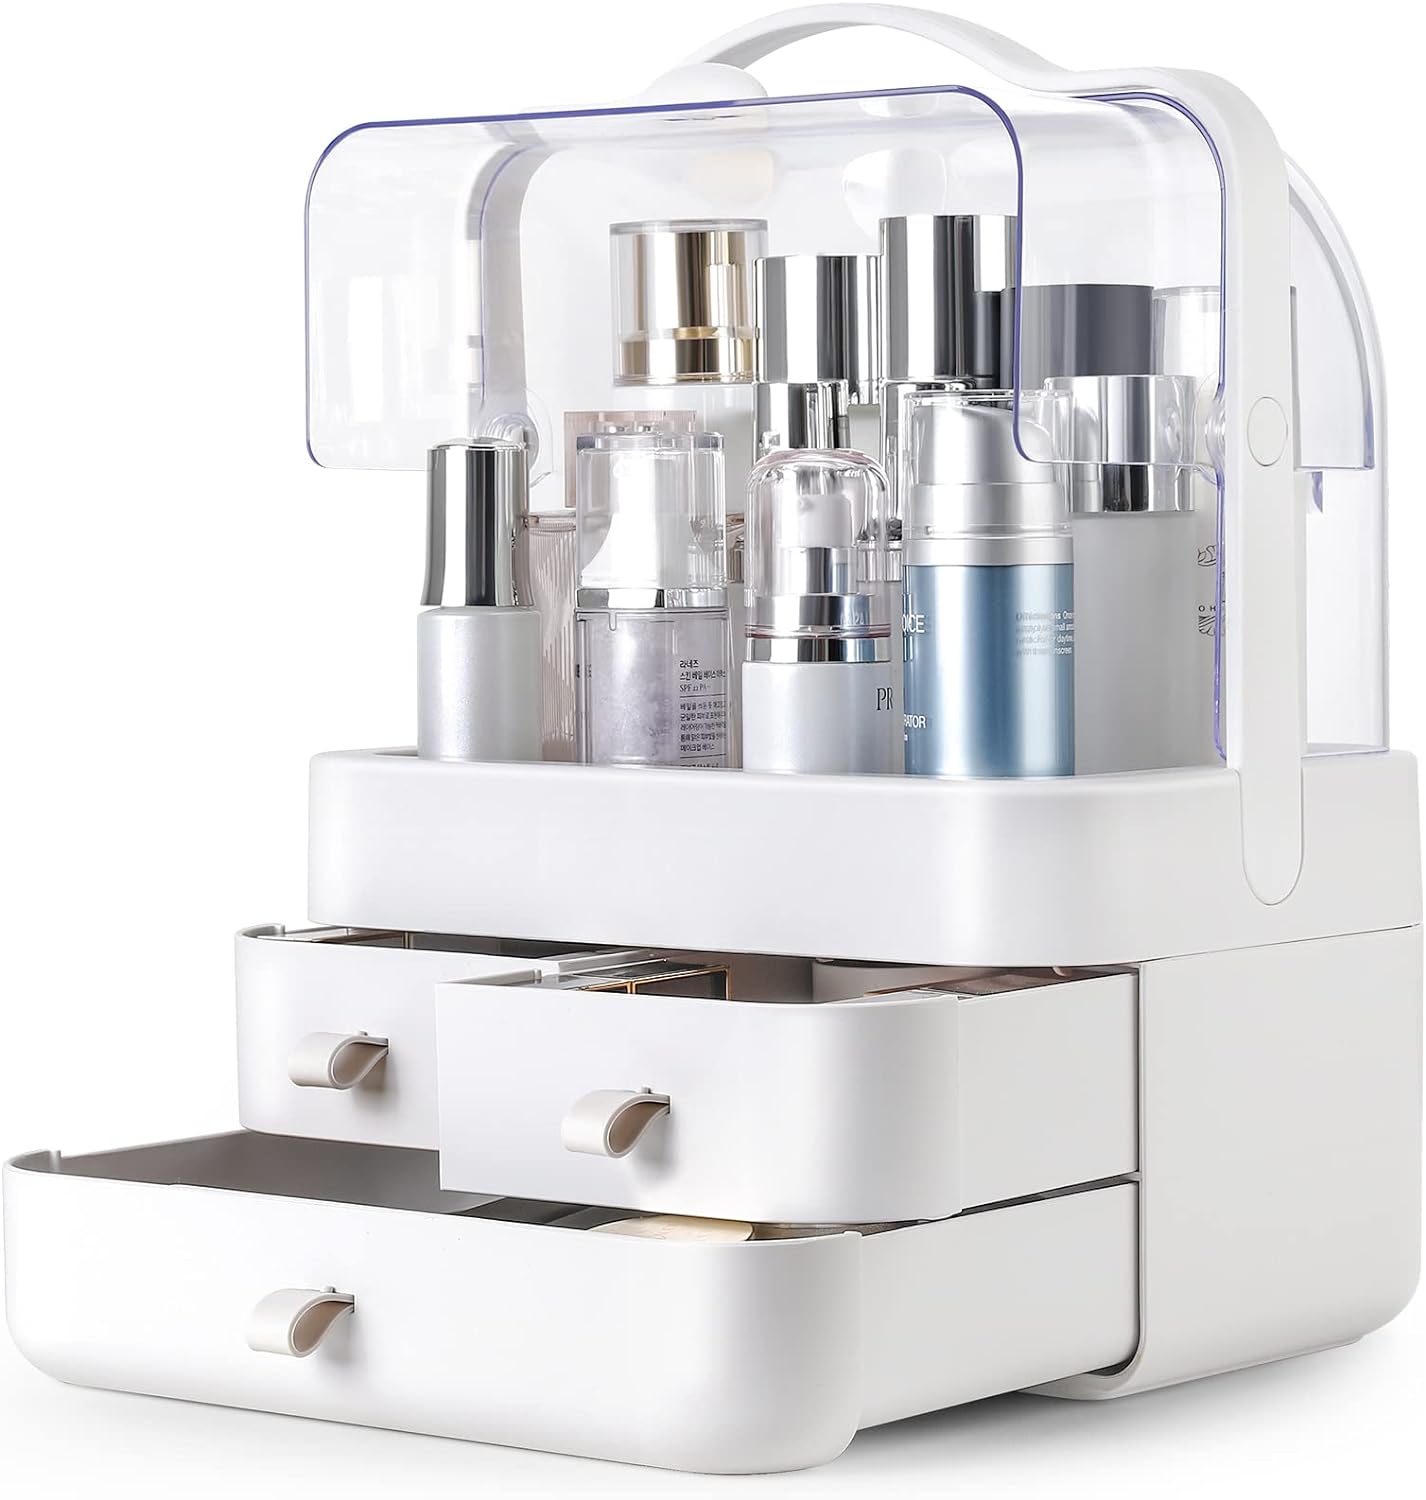 Homde Makeup Organizer Dust Water Proof Cosmetics Storage Display with Fully Open Lid Drawers Handle Skincare Case Great for Bathroom Countertop and Bedroom Vanity Dresser